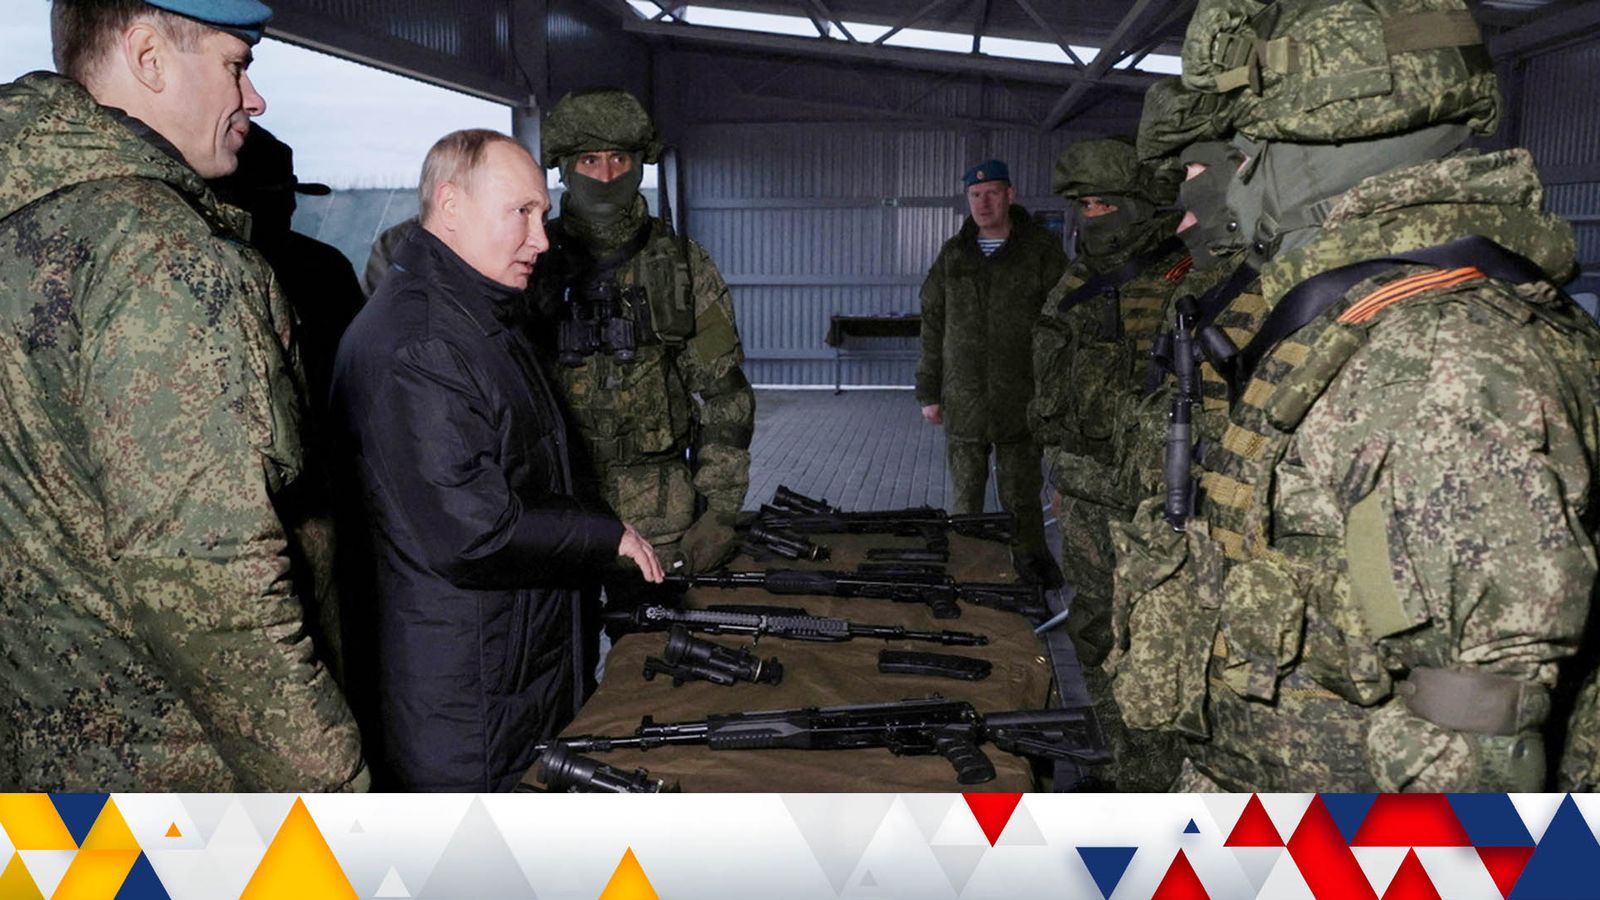 Vladimir Putin fires sniper rifle at Russian boot camp after Ukraine setbacks